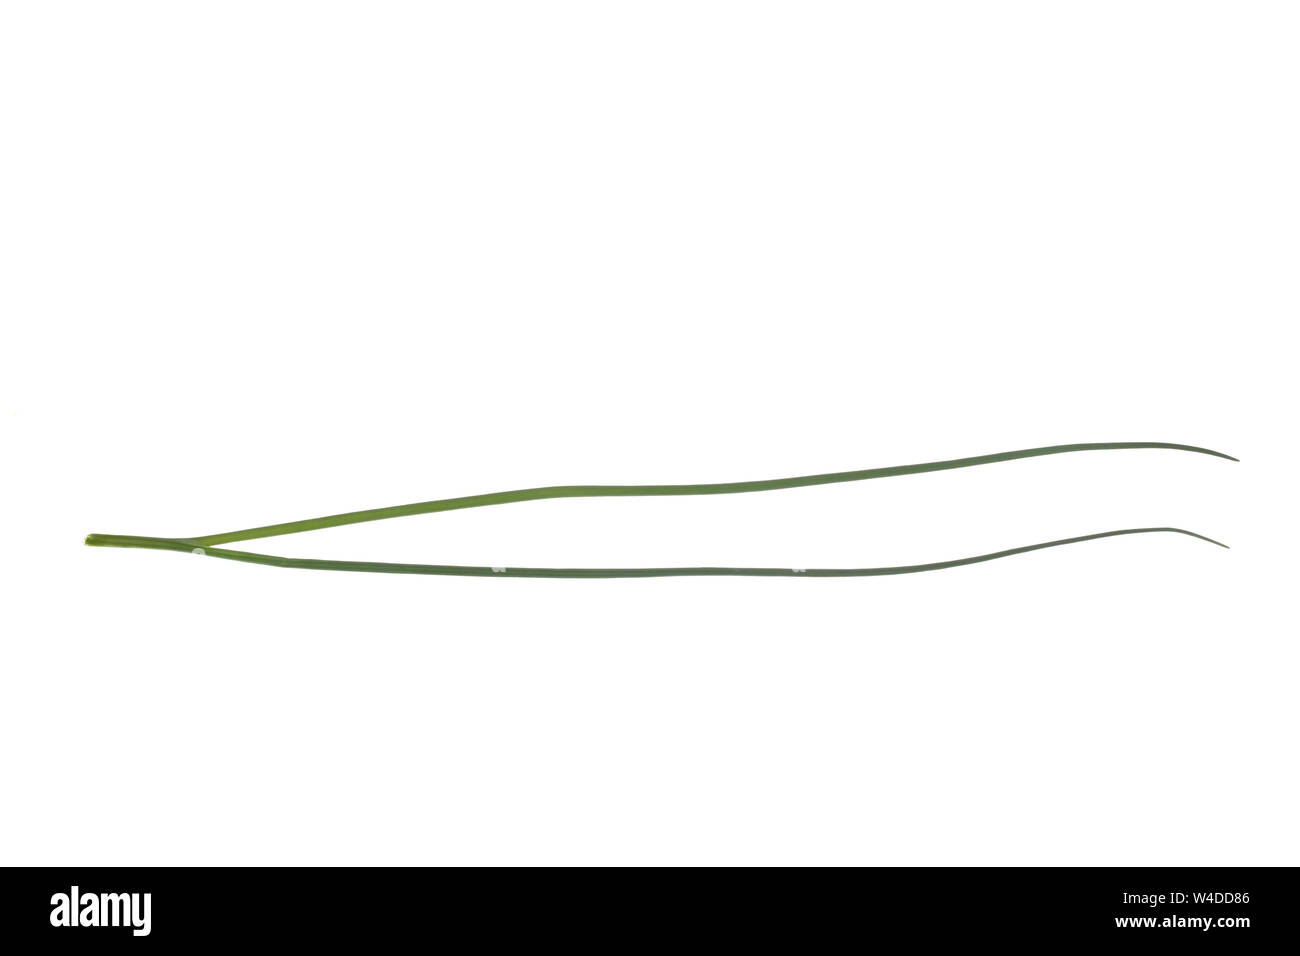 Schnitt-Lauch, Schnittlauch, Allium schoenoprasum, Schnittlauch, La Ciboulette, La civette. Blatt, Blätter, Blatt, Blätter Stockfoto